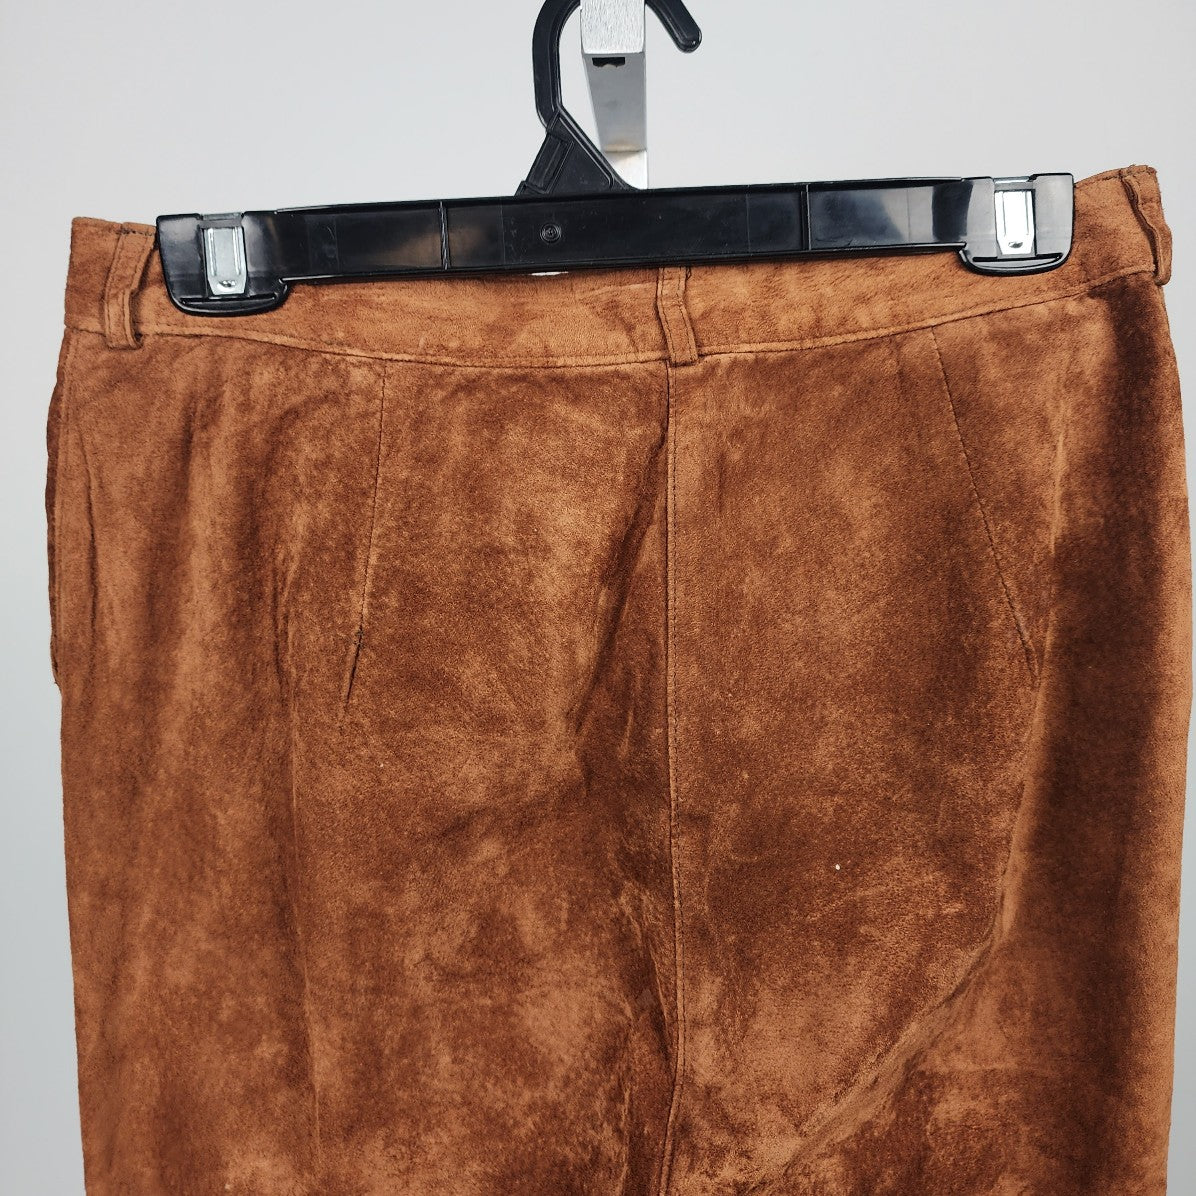 Vintage Conrad C. Collection Brown Suede Pants Size S